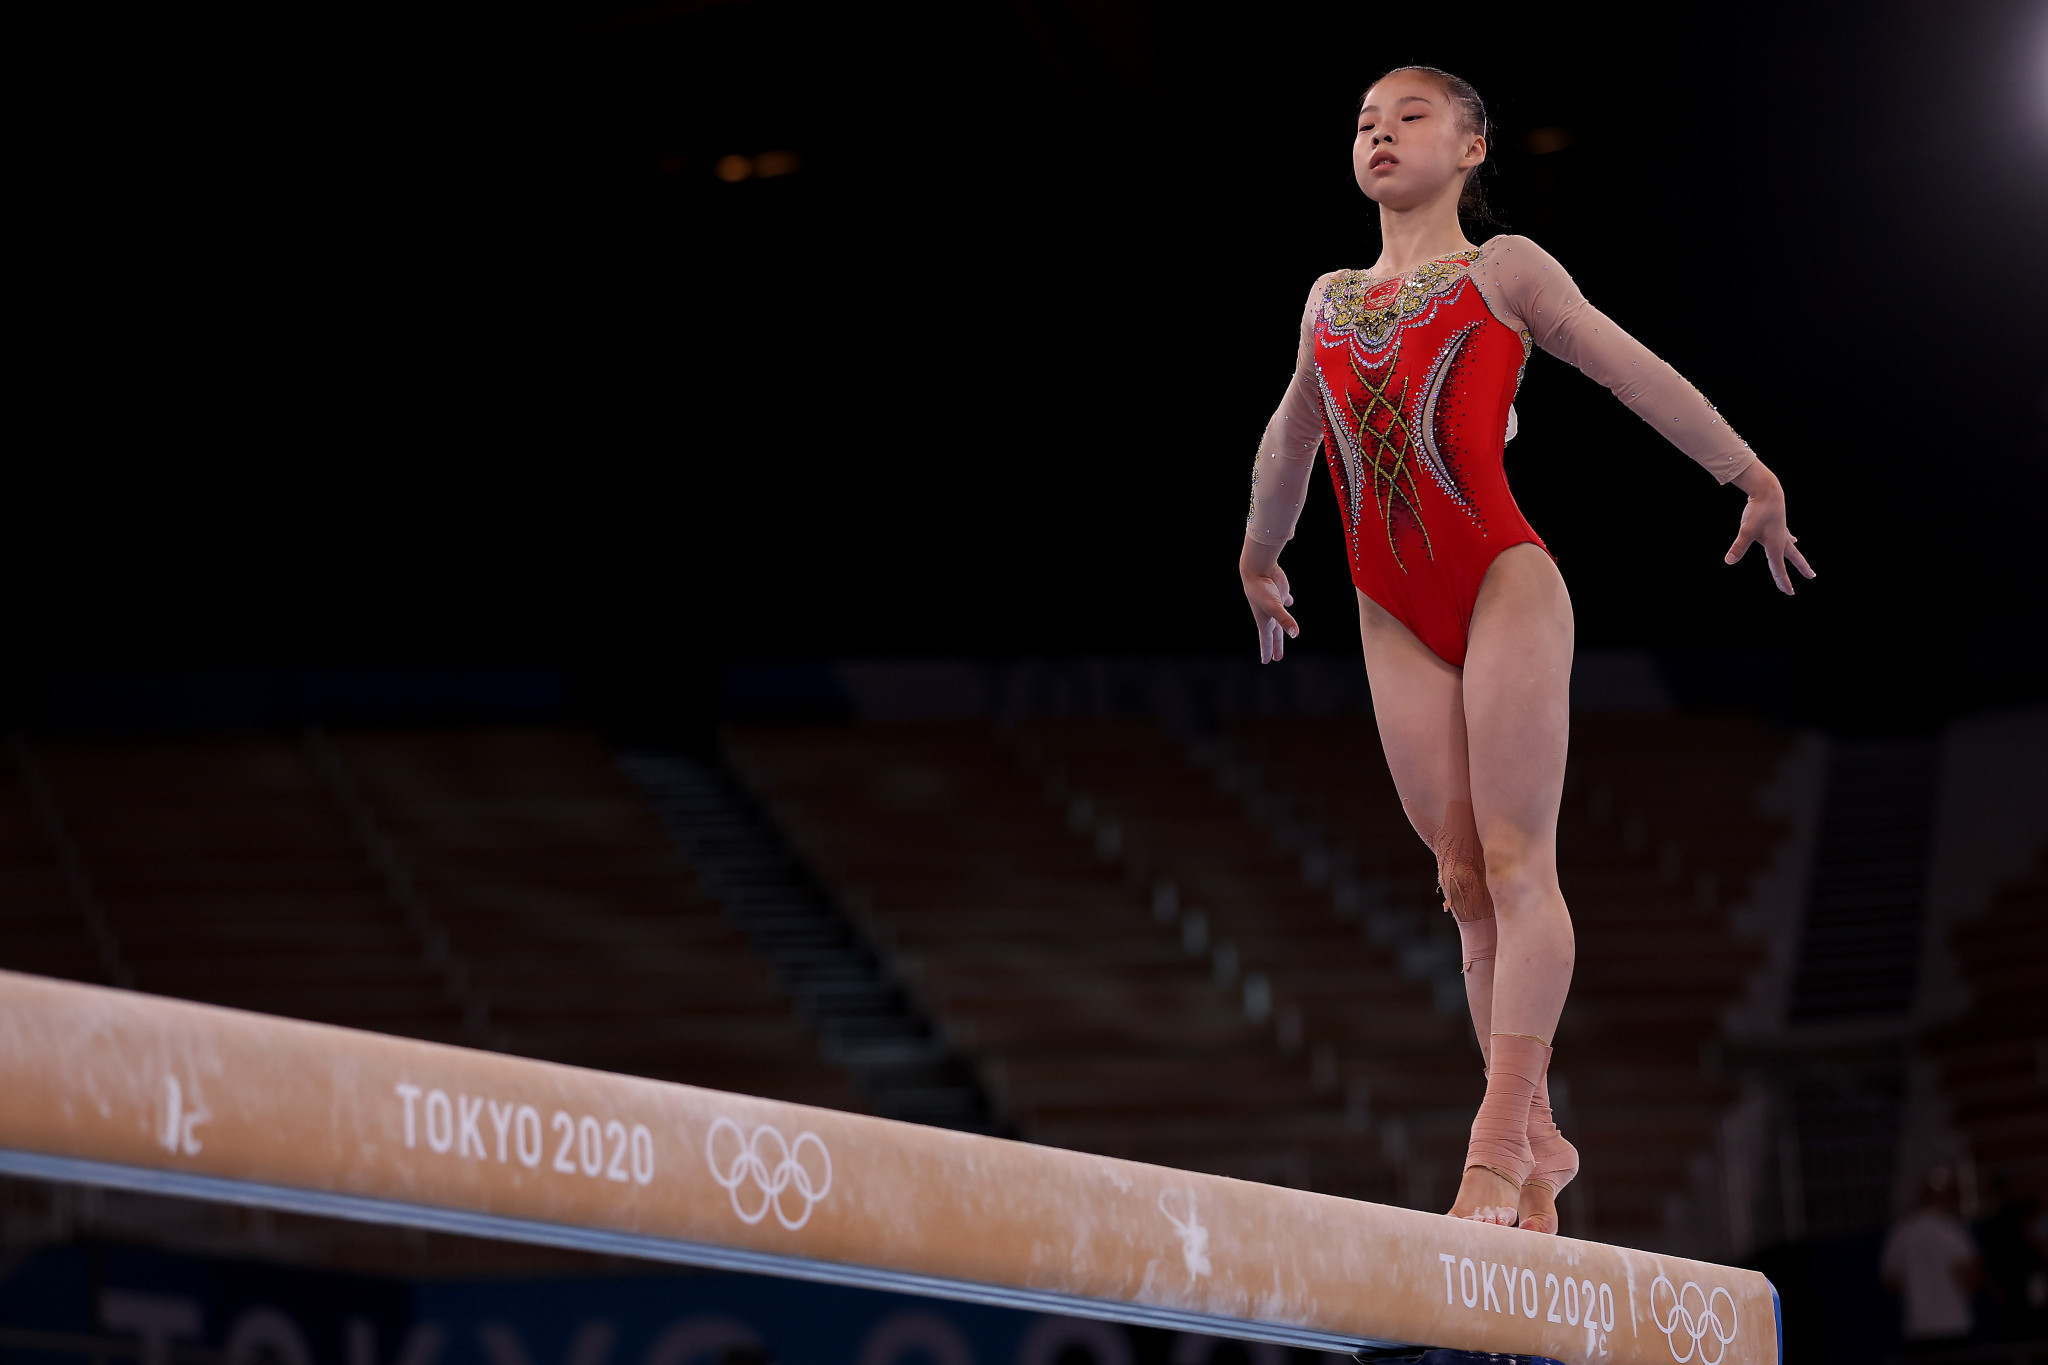 Olympic balance beam champion Guan retires aged 18